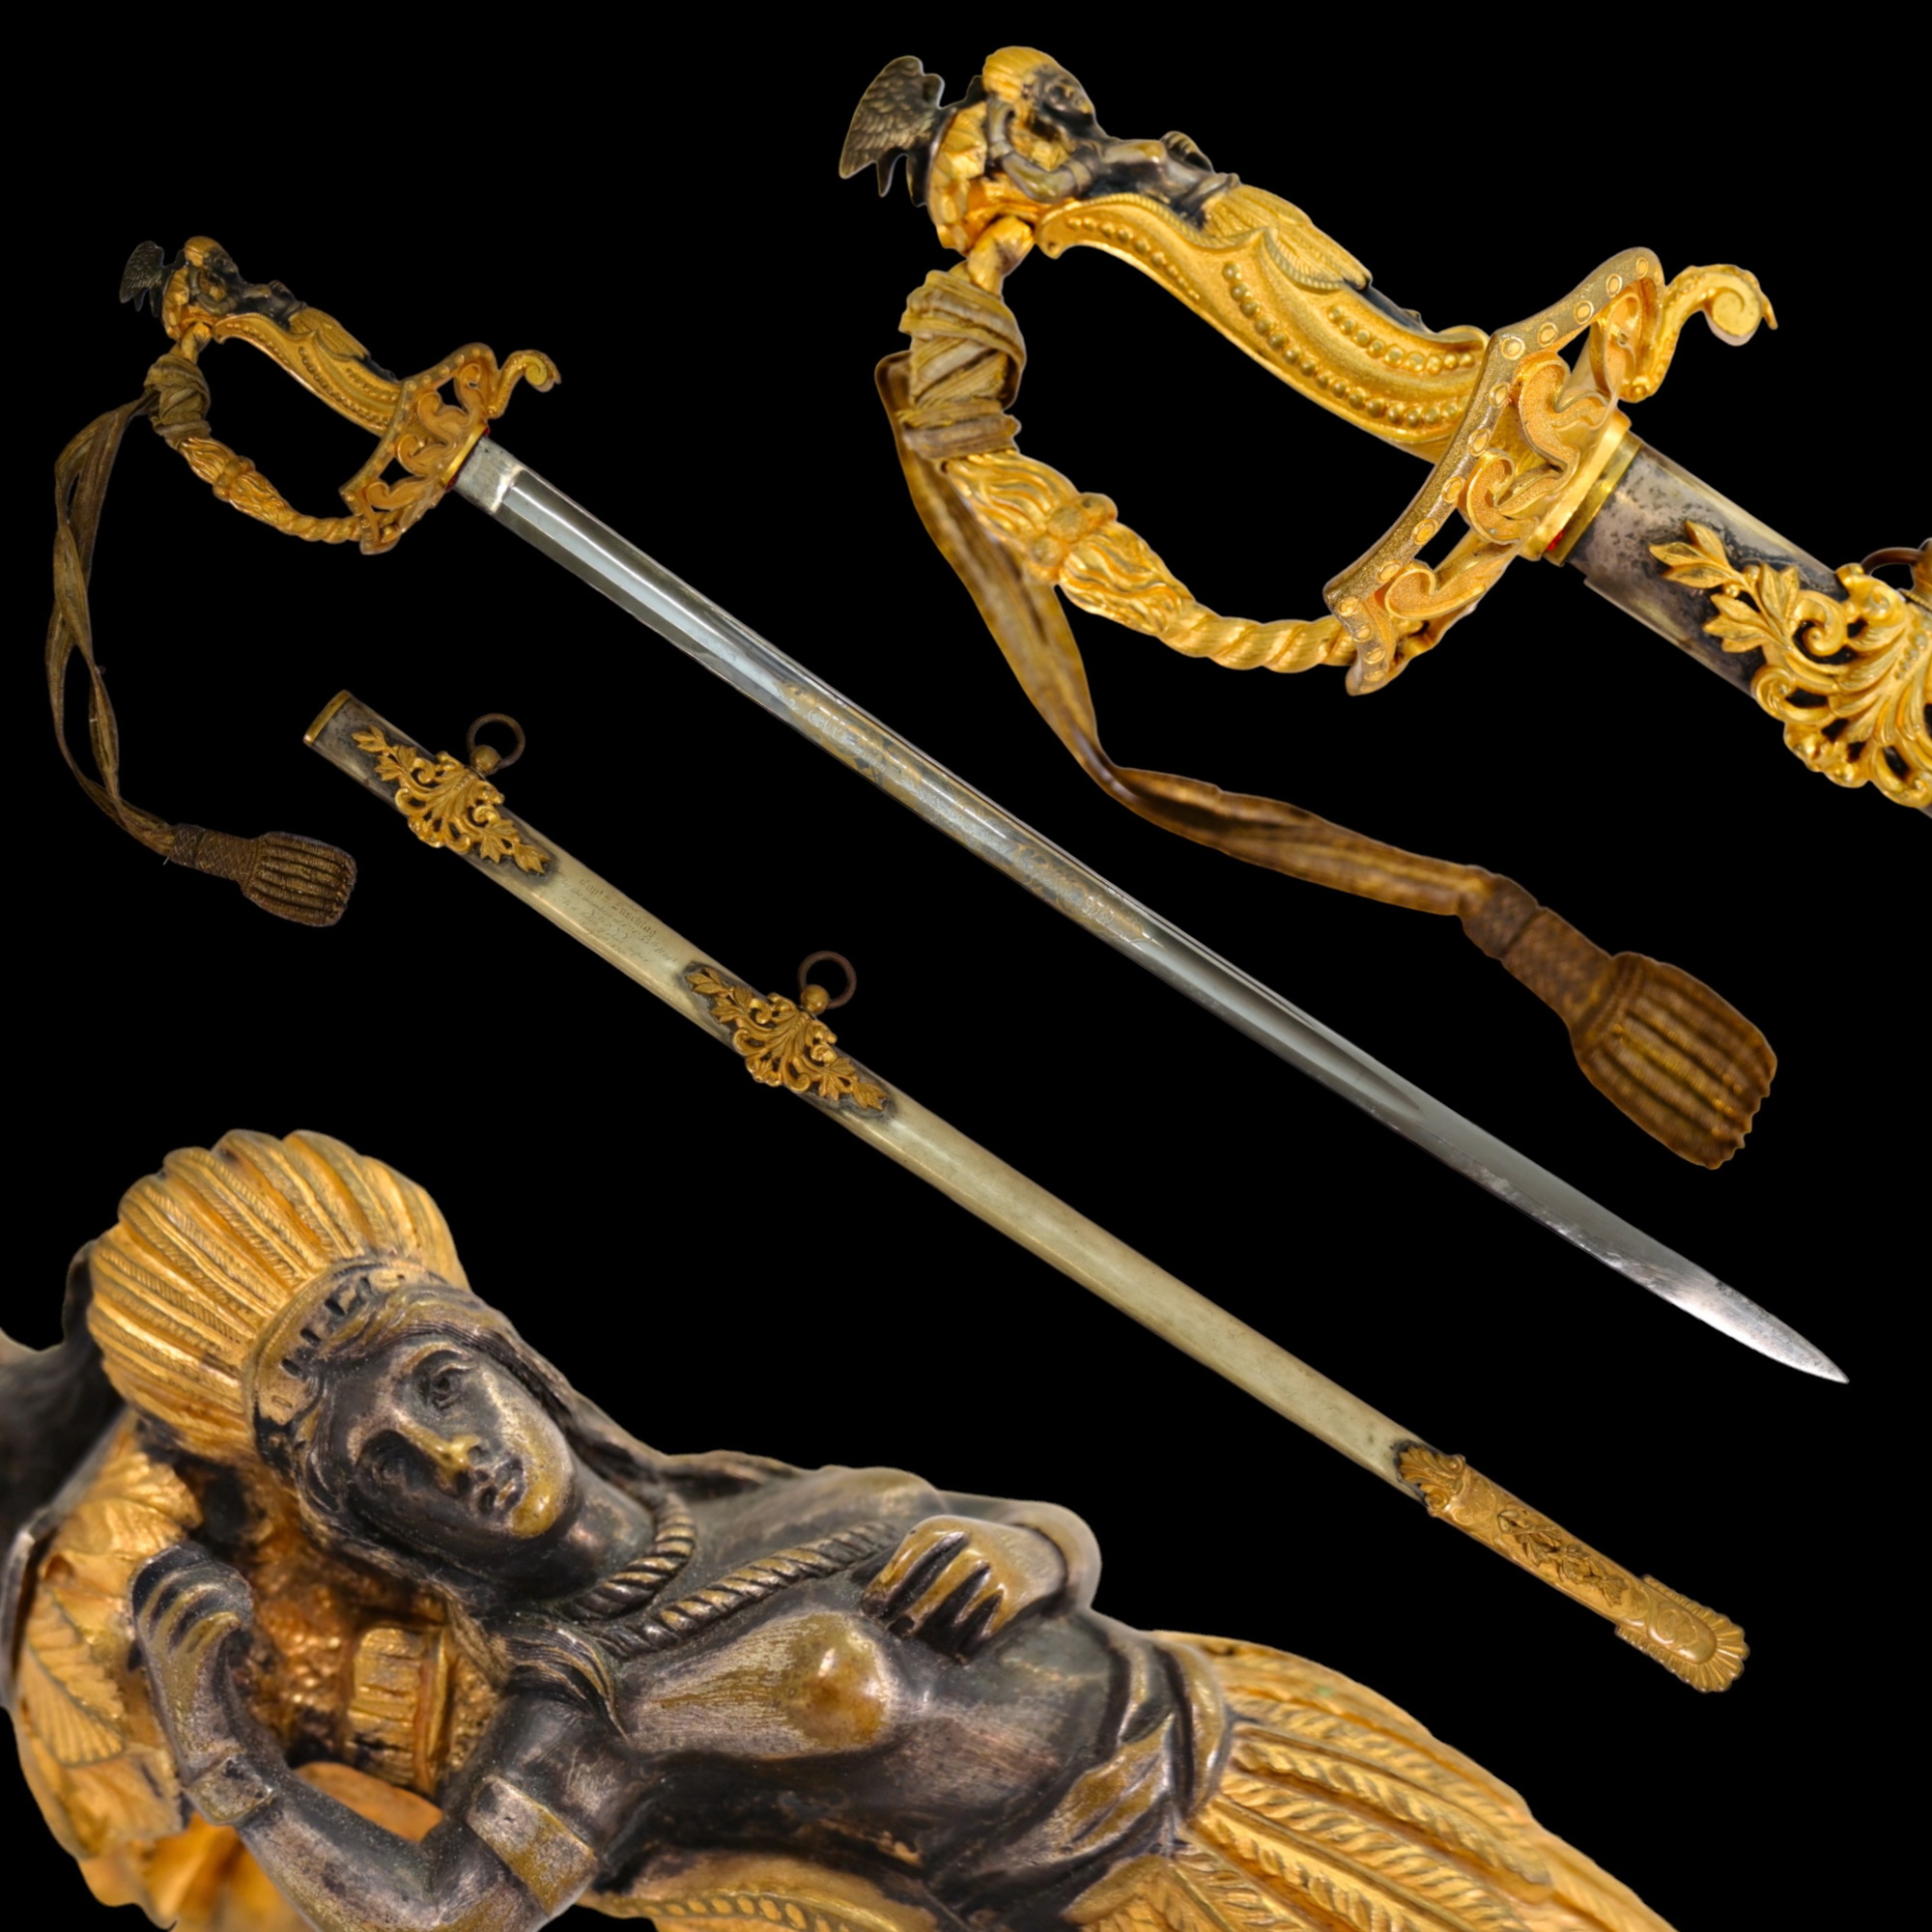 Magnificent "Schuyler Hartley & Graham" Indian Maiden Sword with Civil War Related Presentation.